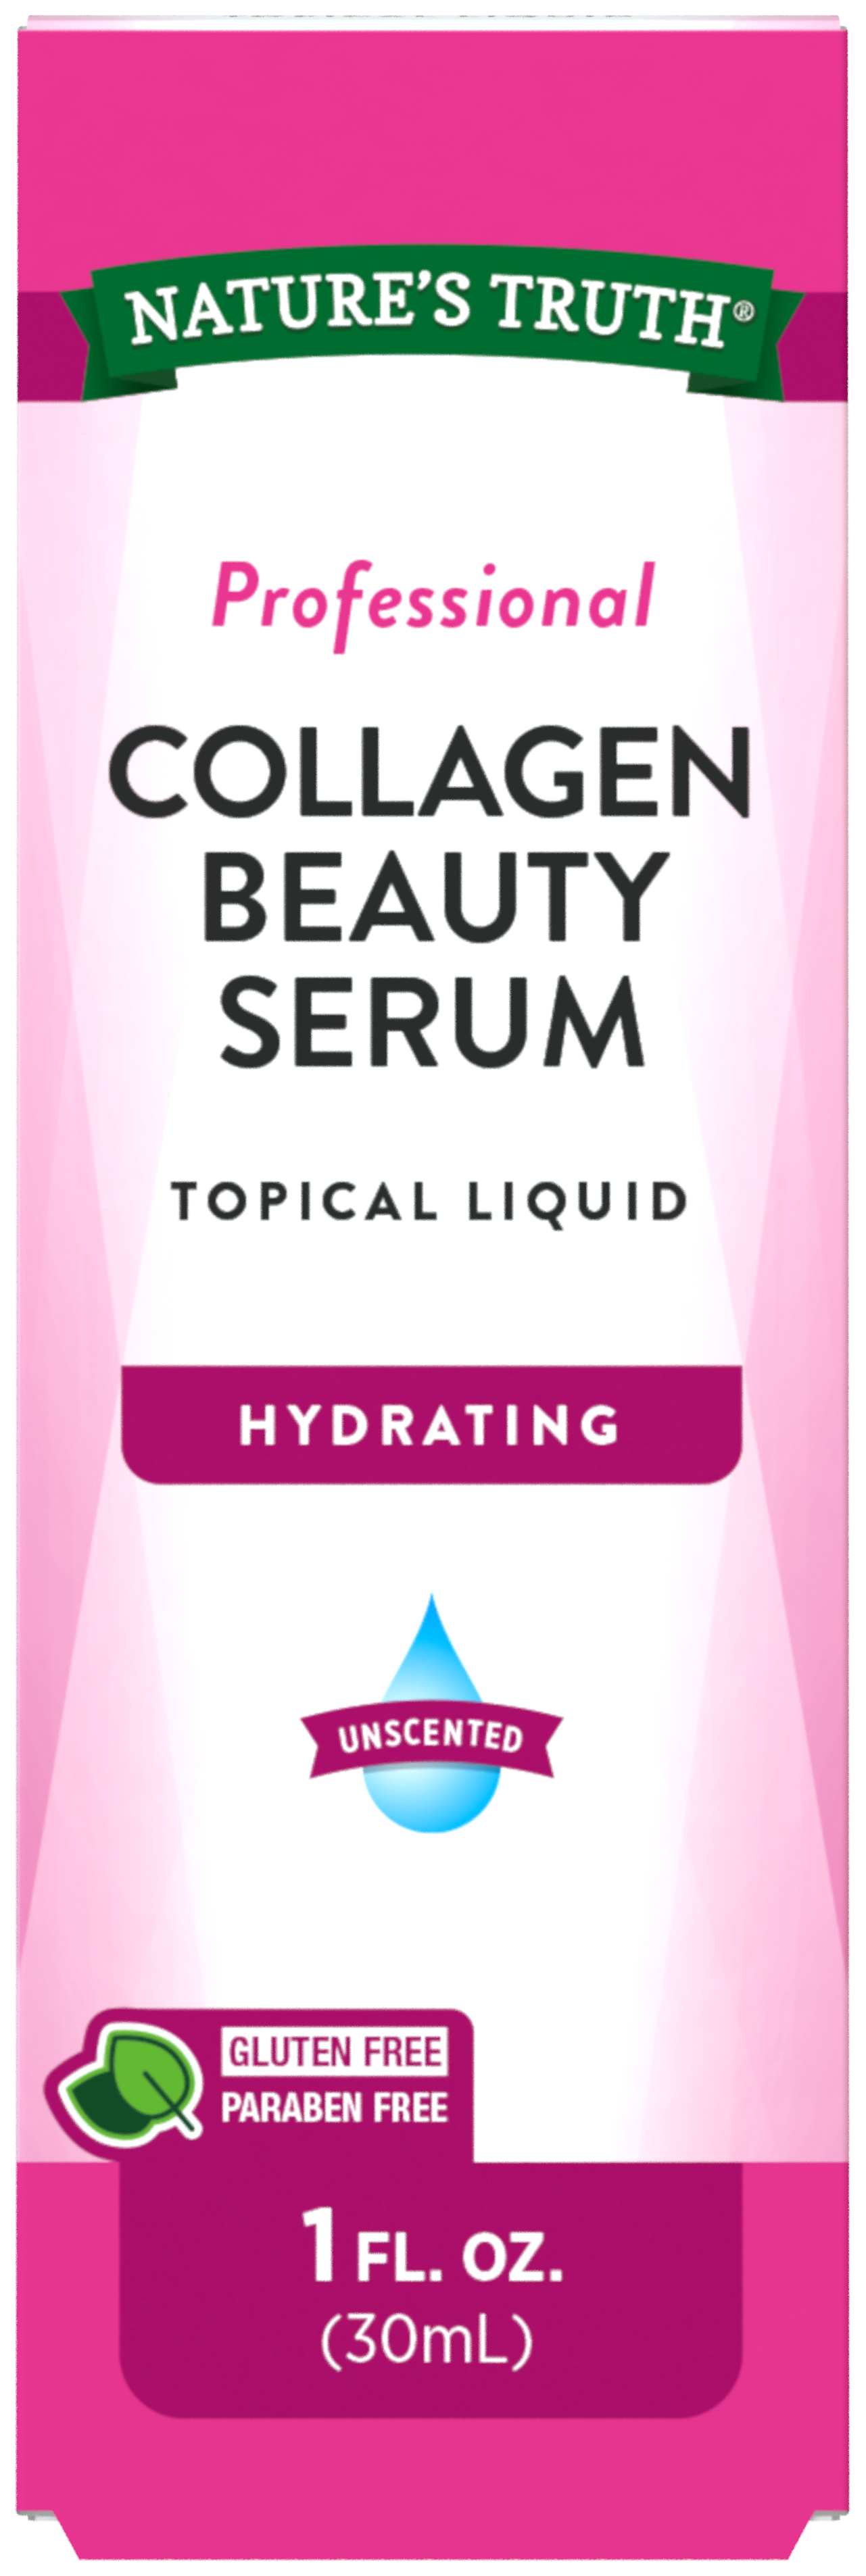 Collagen Beauty Serum | Hydrating